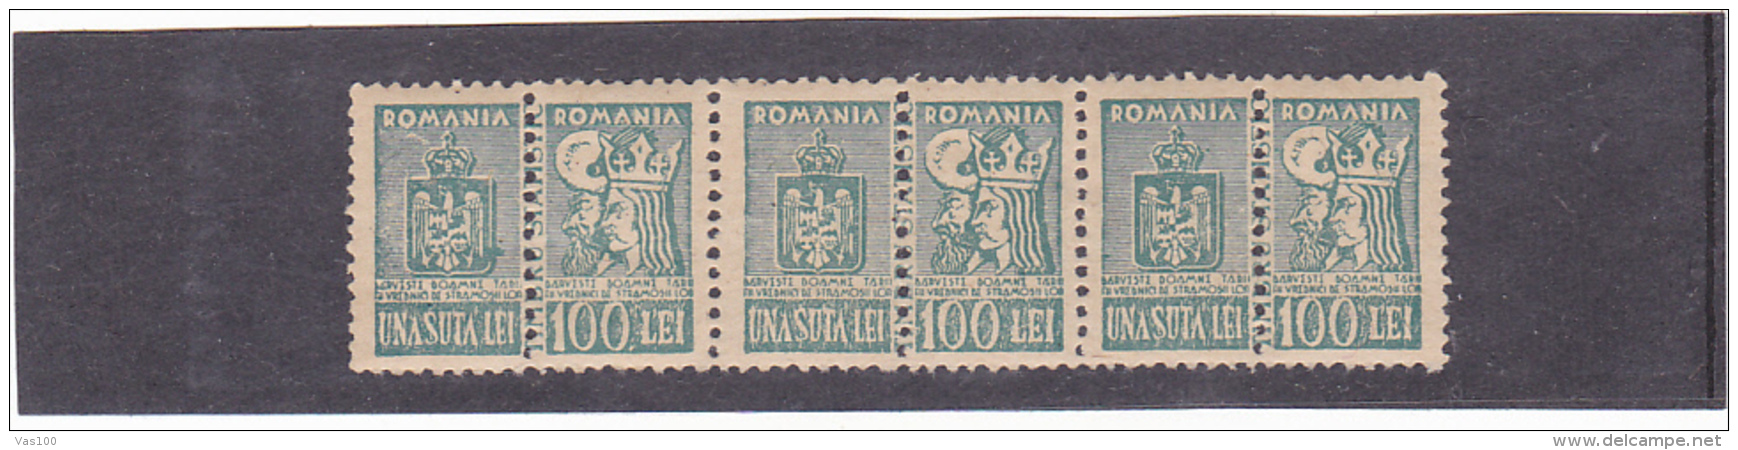 # 186   REVENUE STAMP, 100 LEI, BLOCK, ROMANIA - Fiscale Zegels